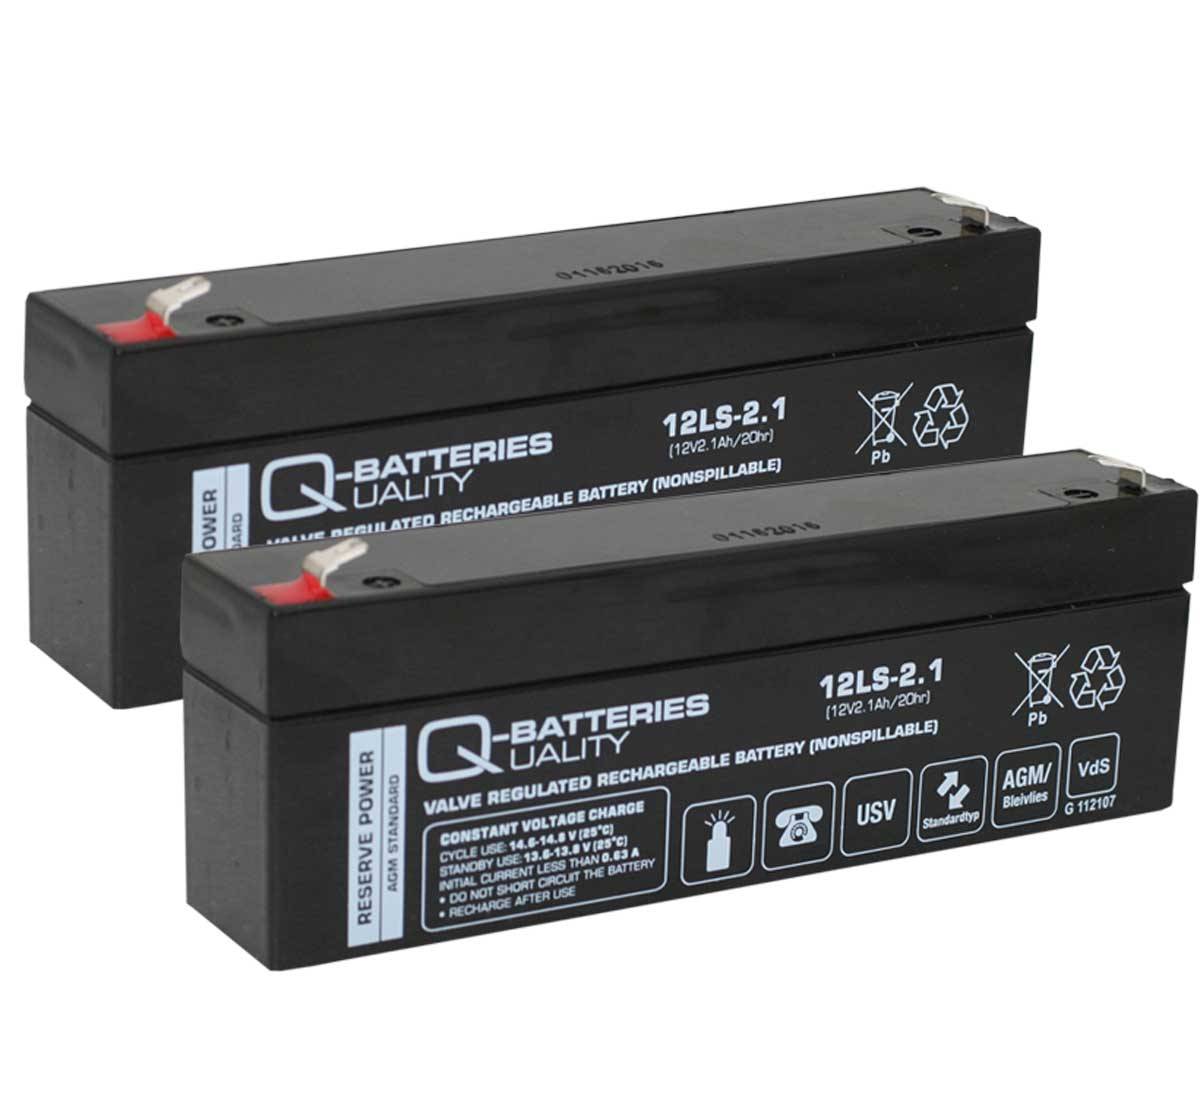 Q-Batteries Batteria di ricambio per sollevatore da bagno e sollevatore di pazienti 24V 2.1Ah (2 x 12V)